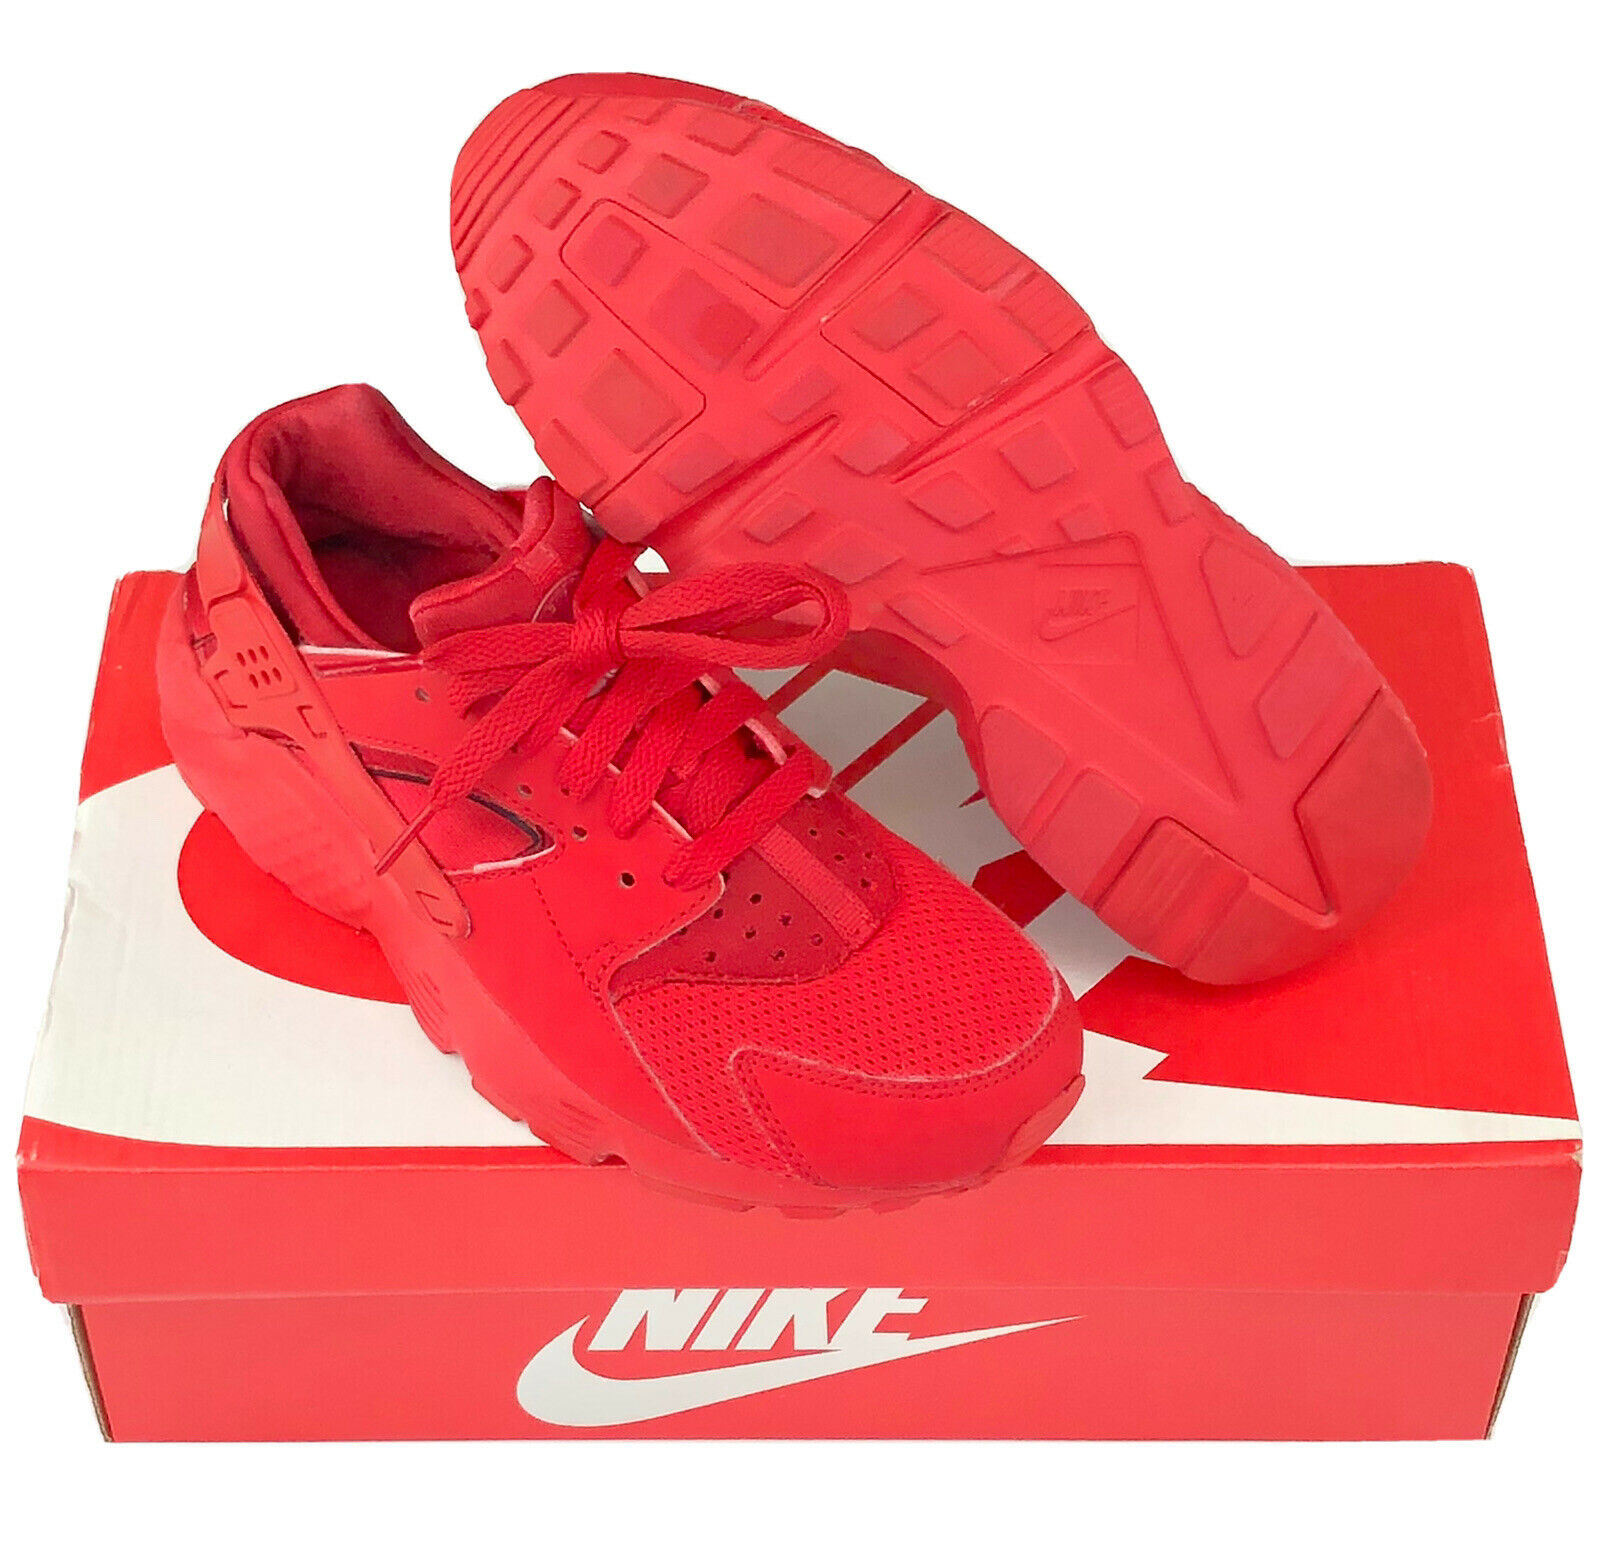 Nike Huarache Run Sneakers (GS) Kids Size 4Y 654275-600 University Red Shoes